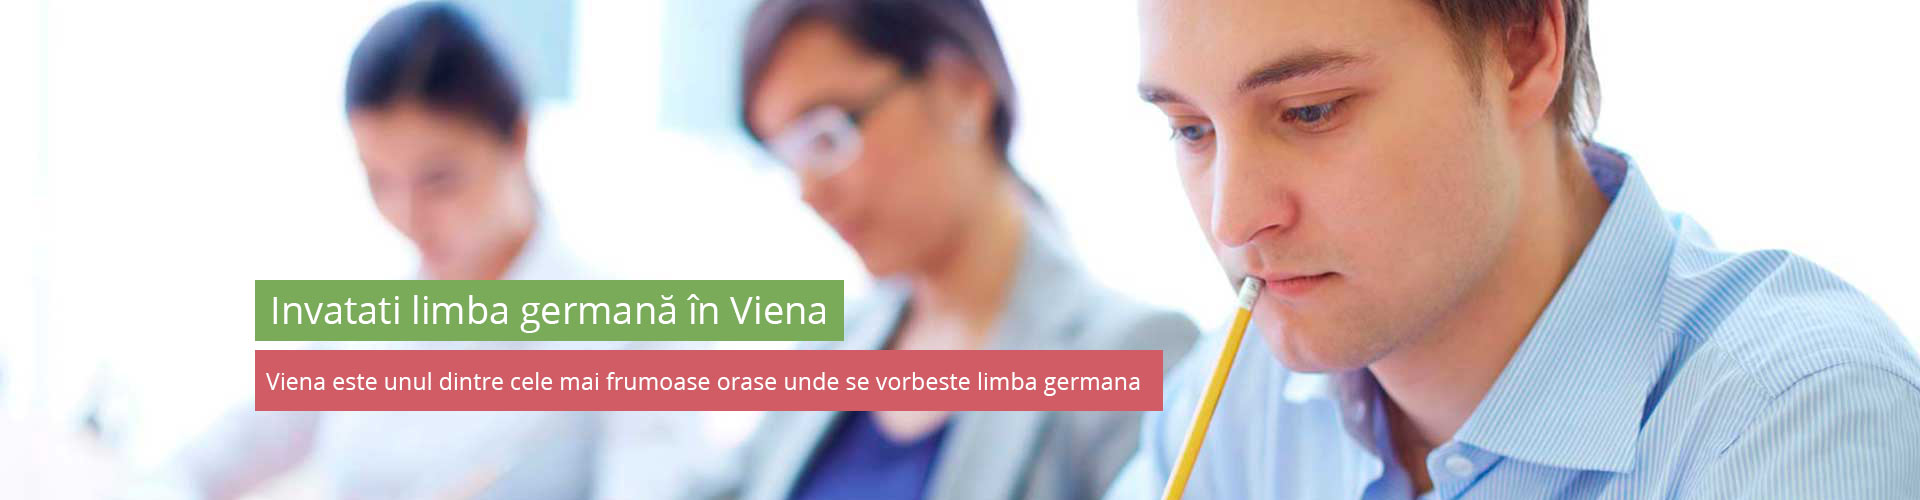 Învățați limba germană în Viena